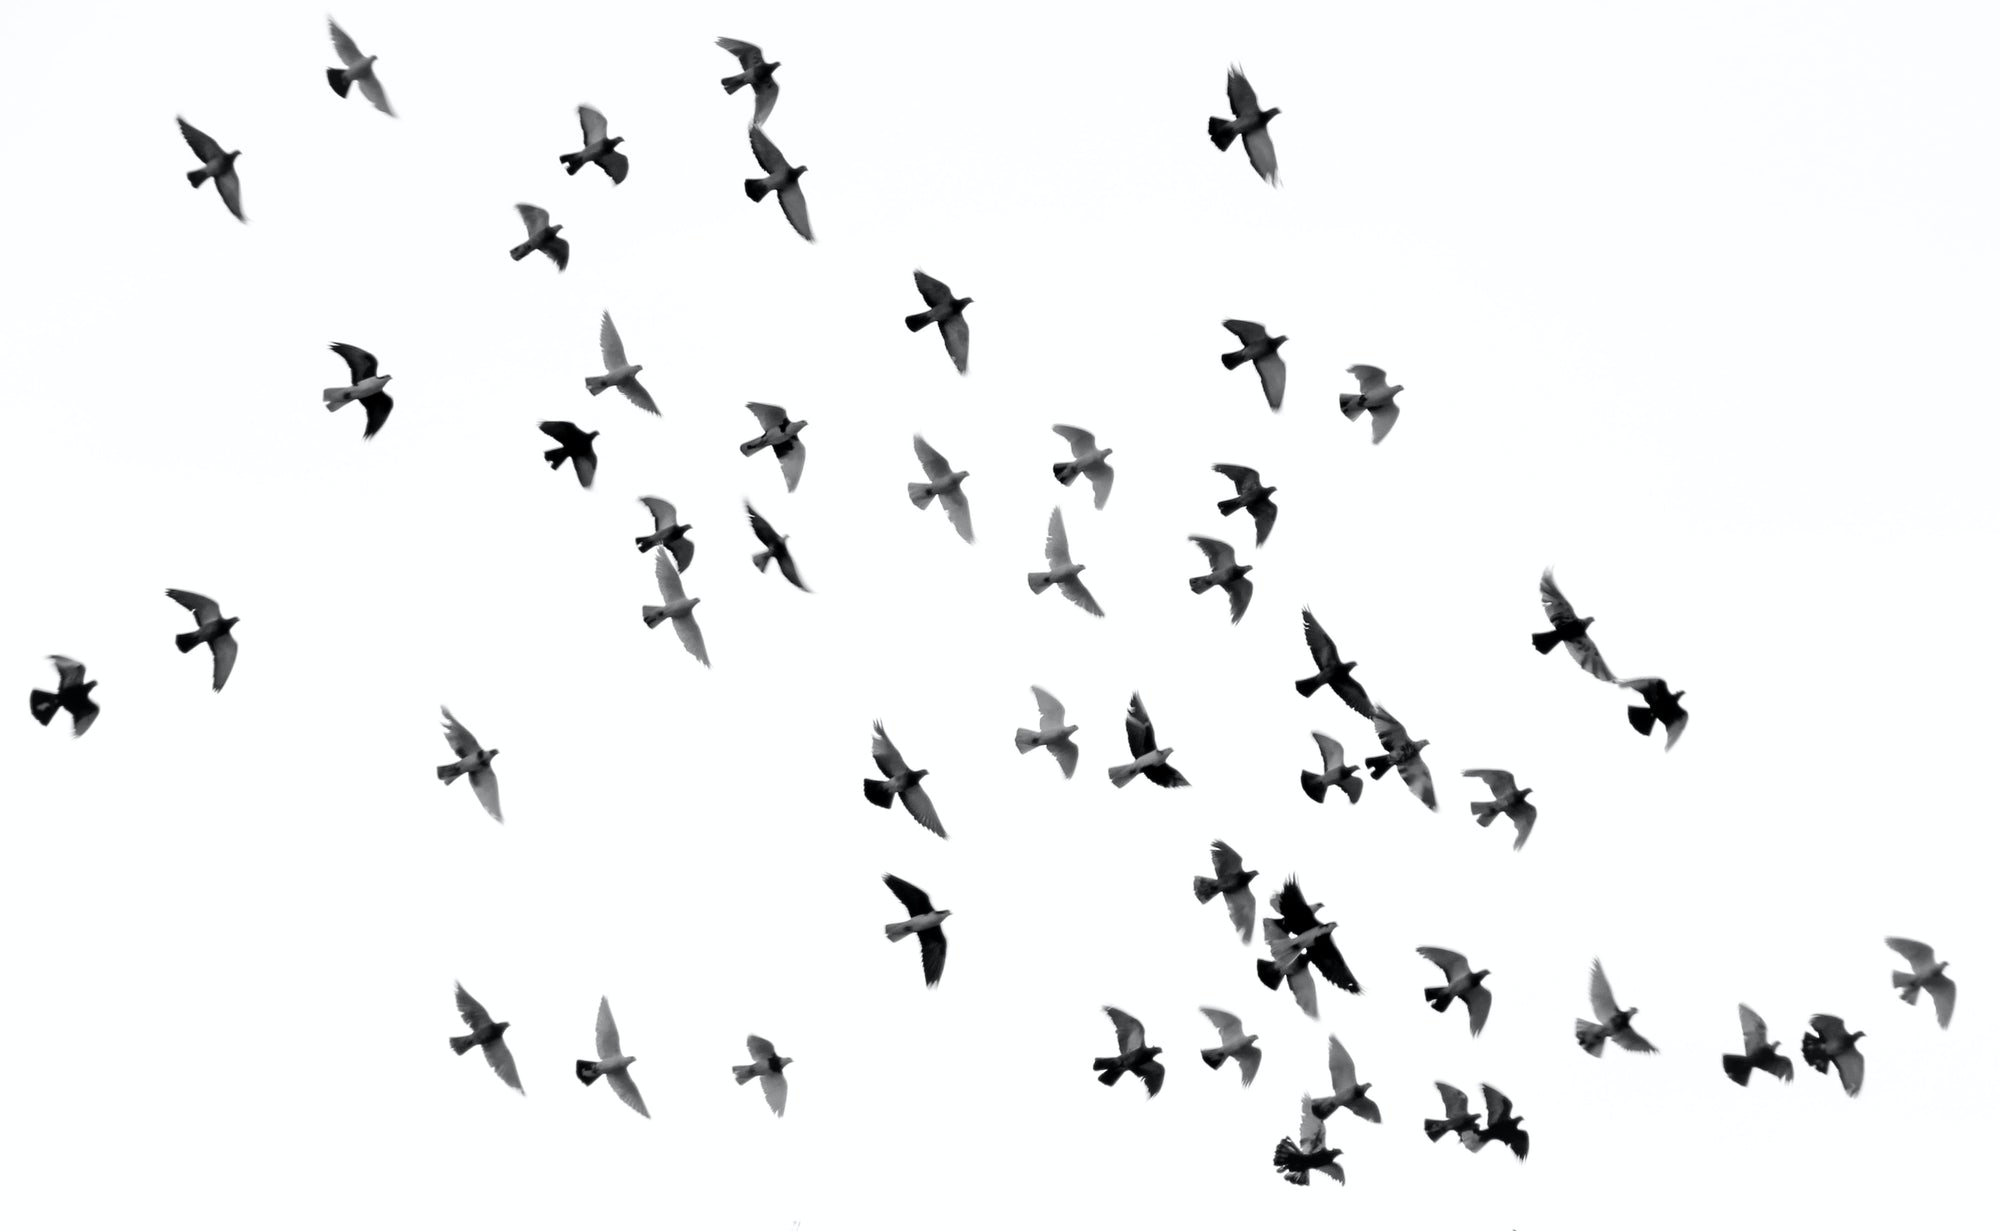 birds take flight